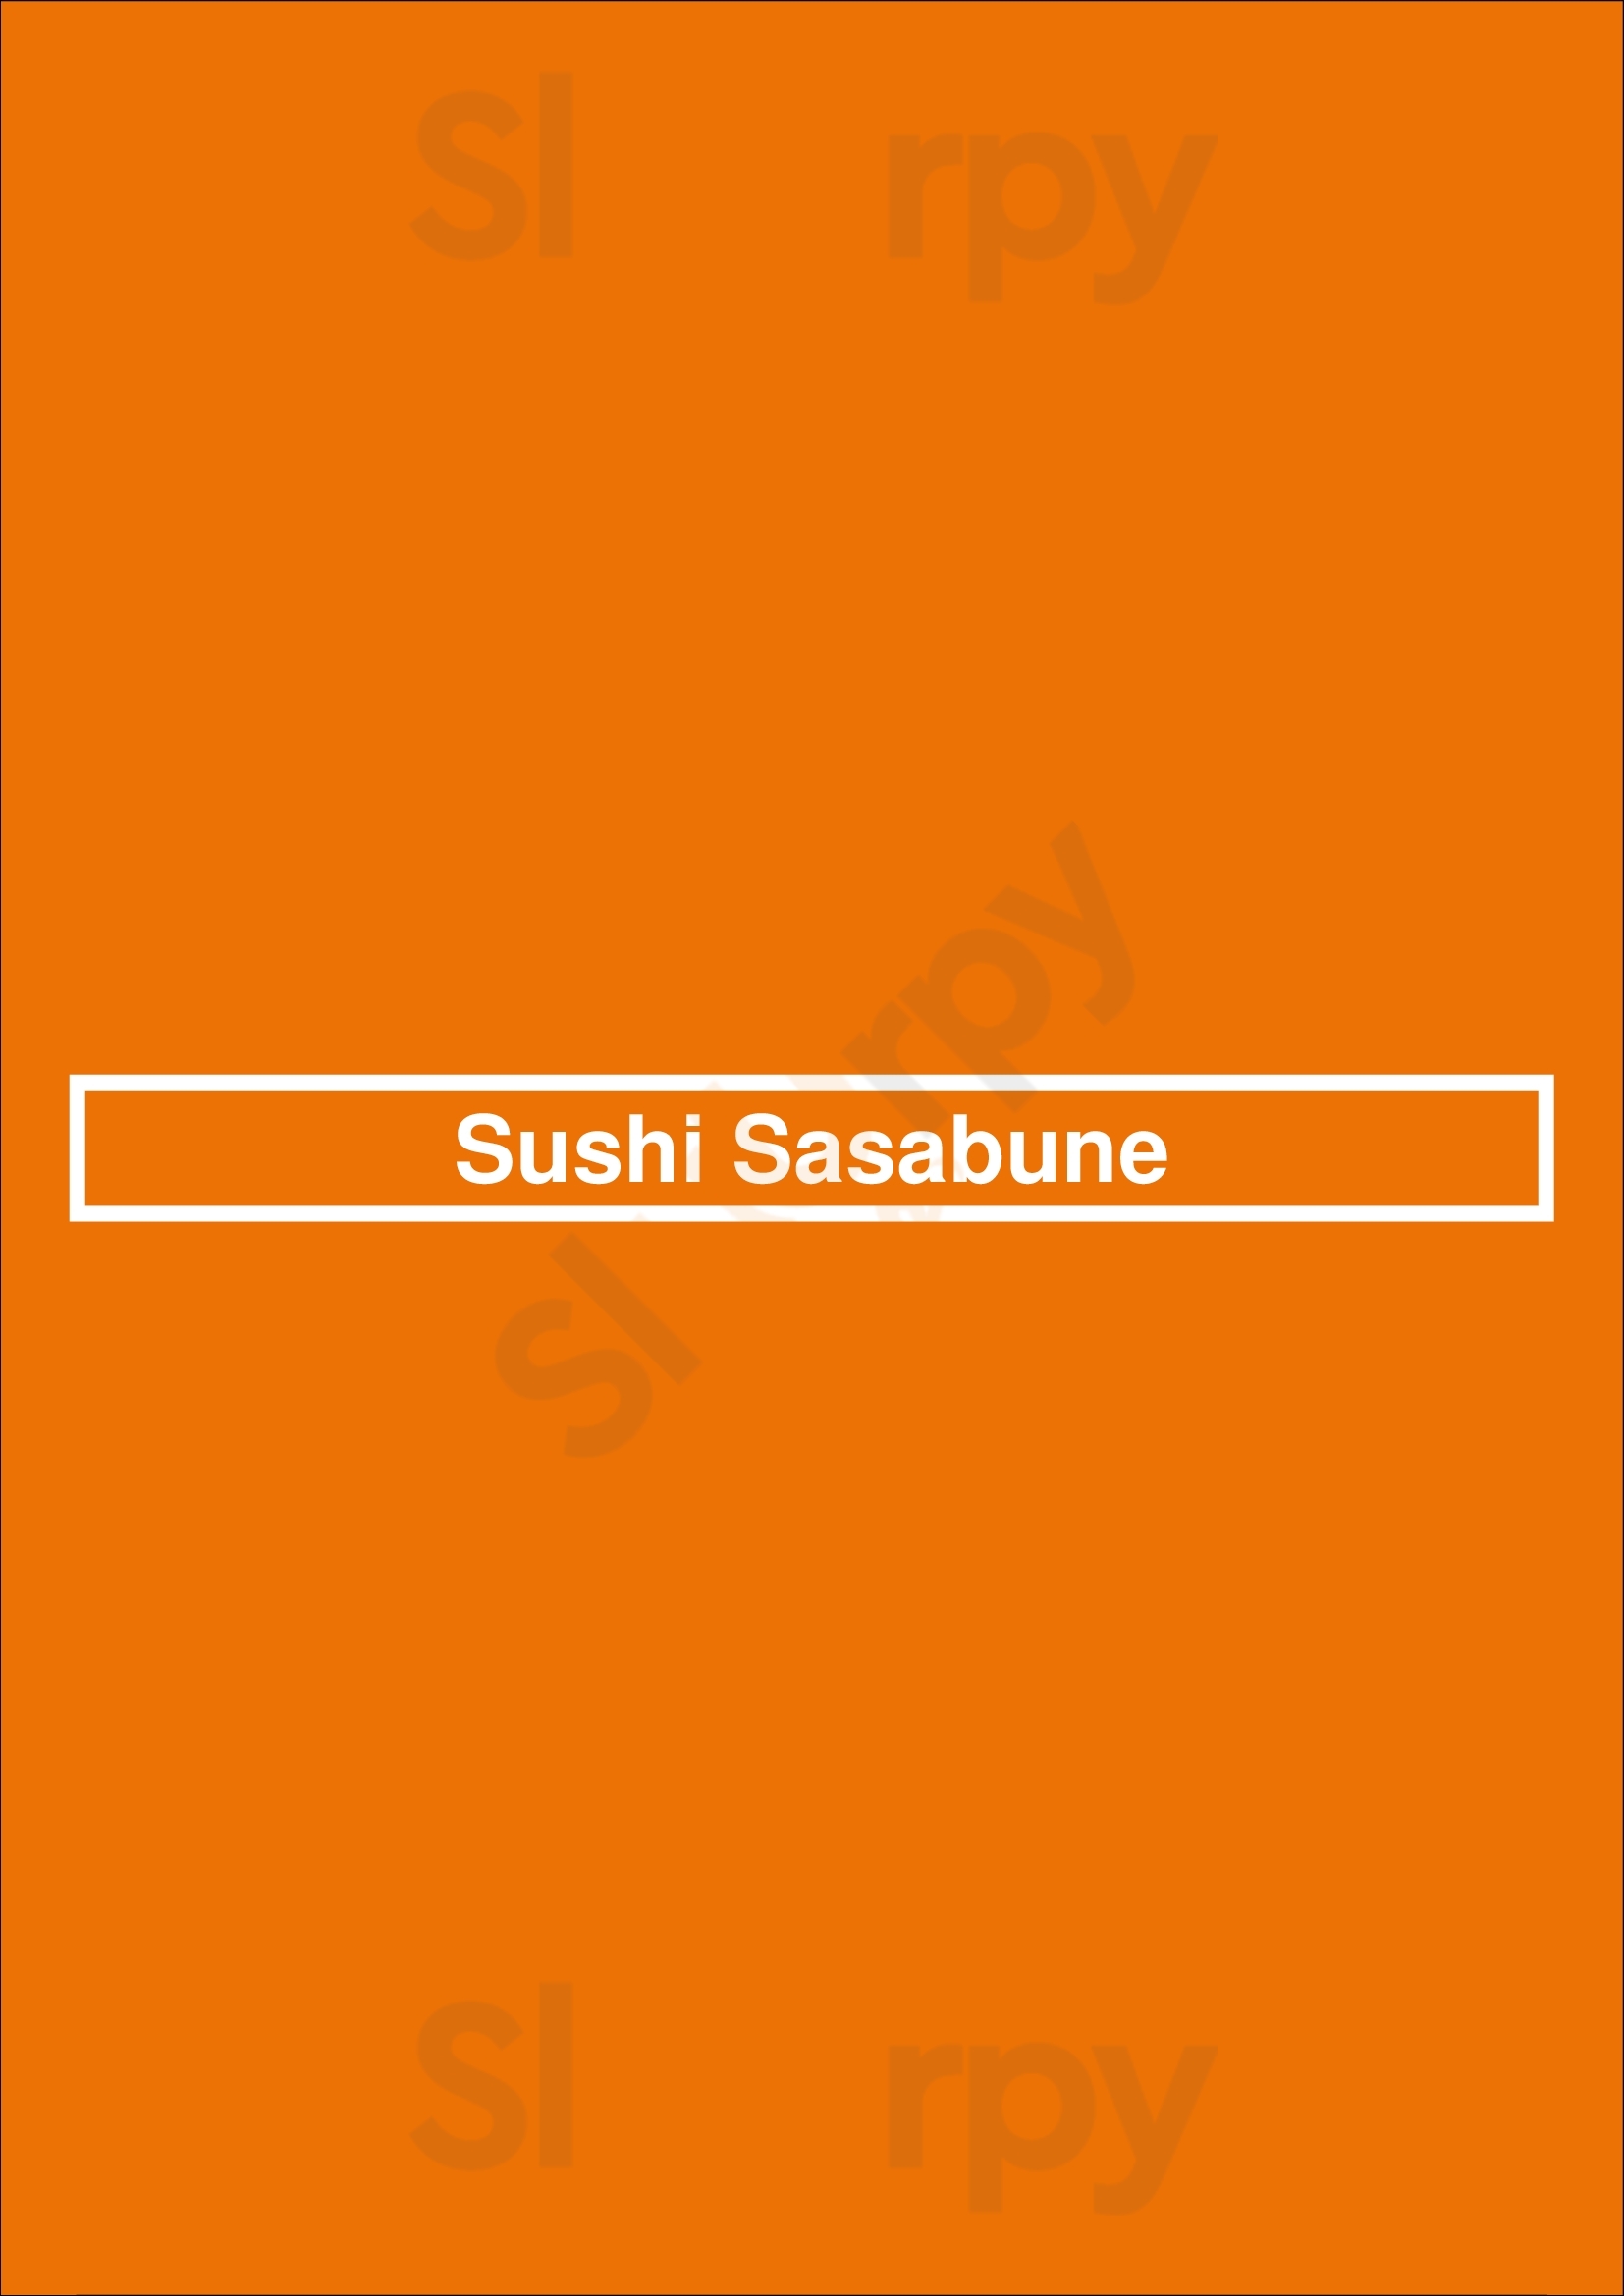 Sushi Sasabune Honolulu Menu - 1